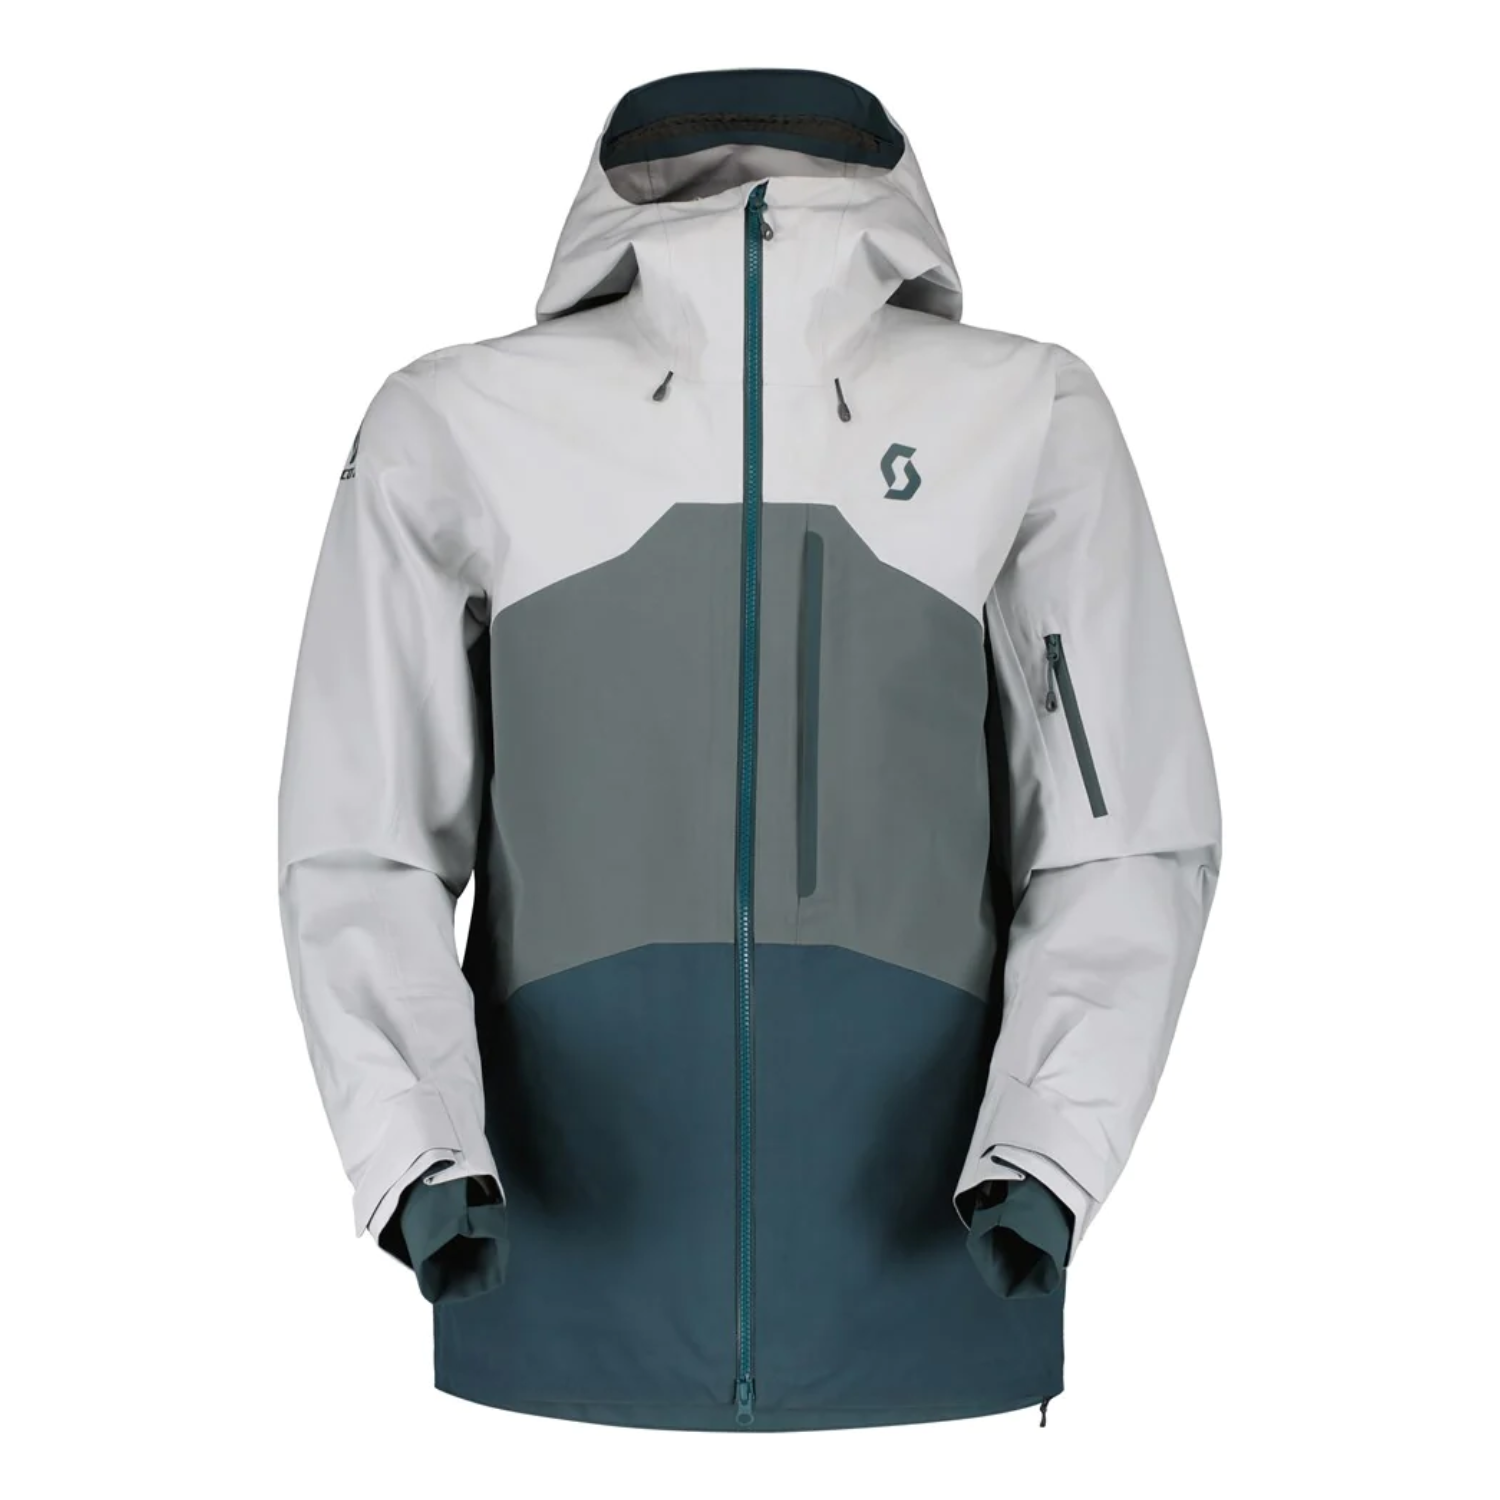 Scott Men's Vertic 3L Jacket - Light Grey / Grey Green